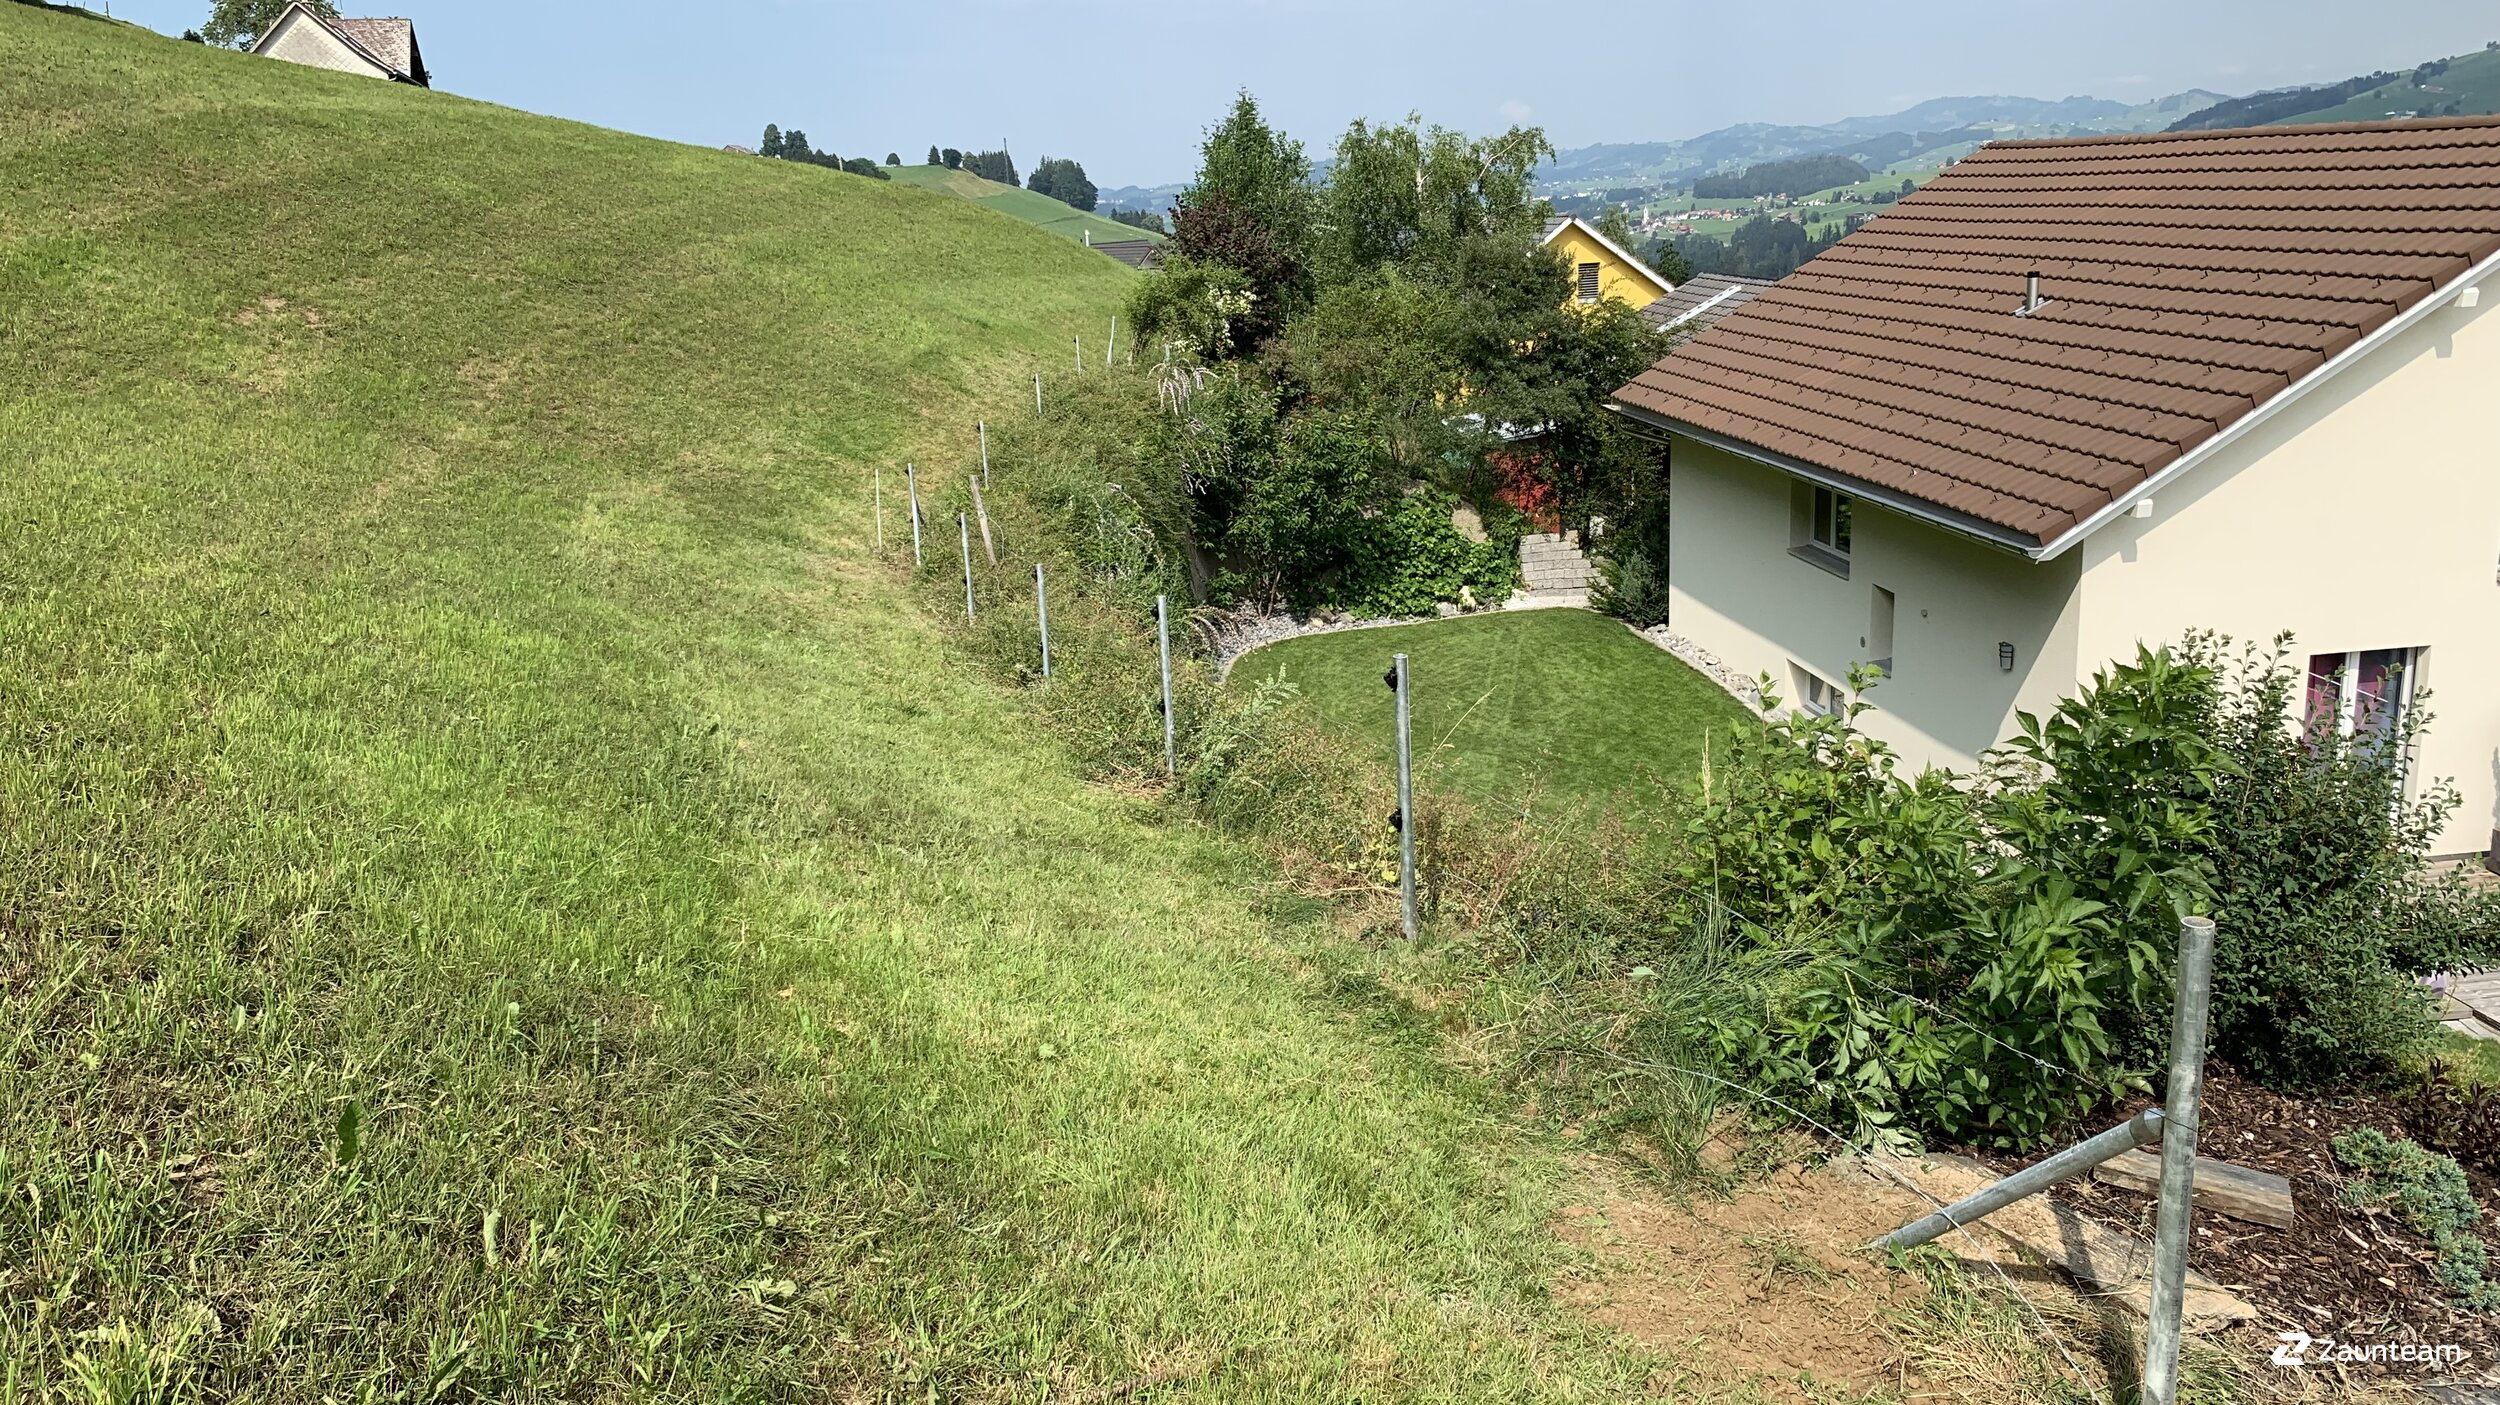 Clôture en fil de 2019 à 9104 Waldstatt Suisse de Zaunteam Appenzellerland.